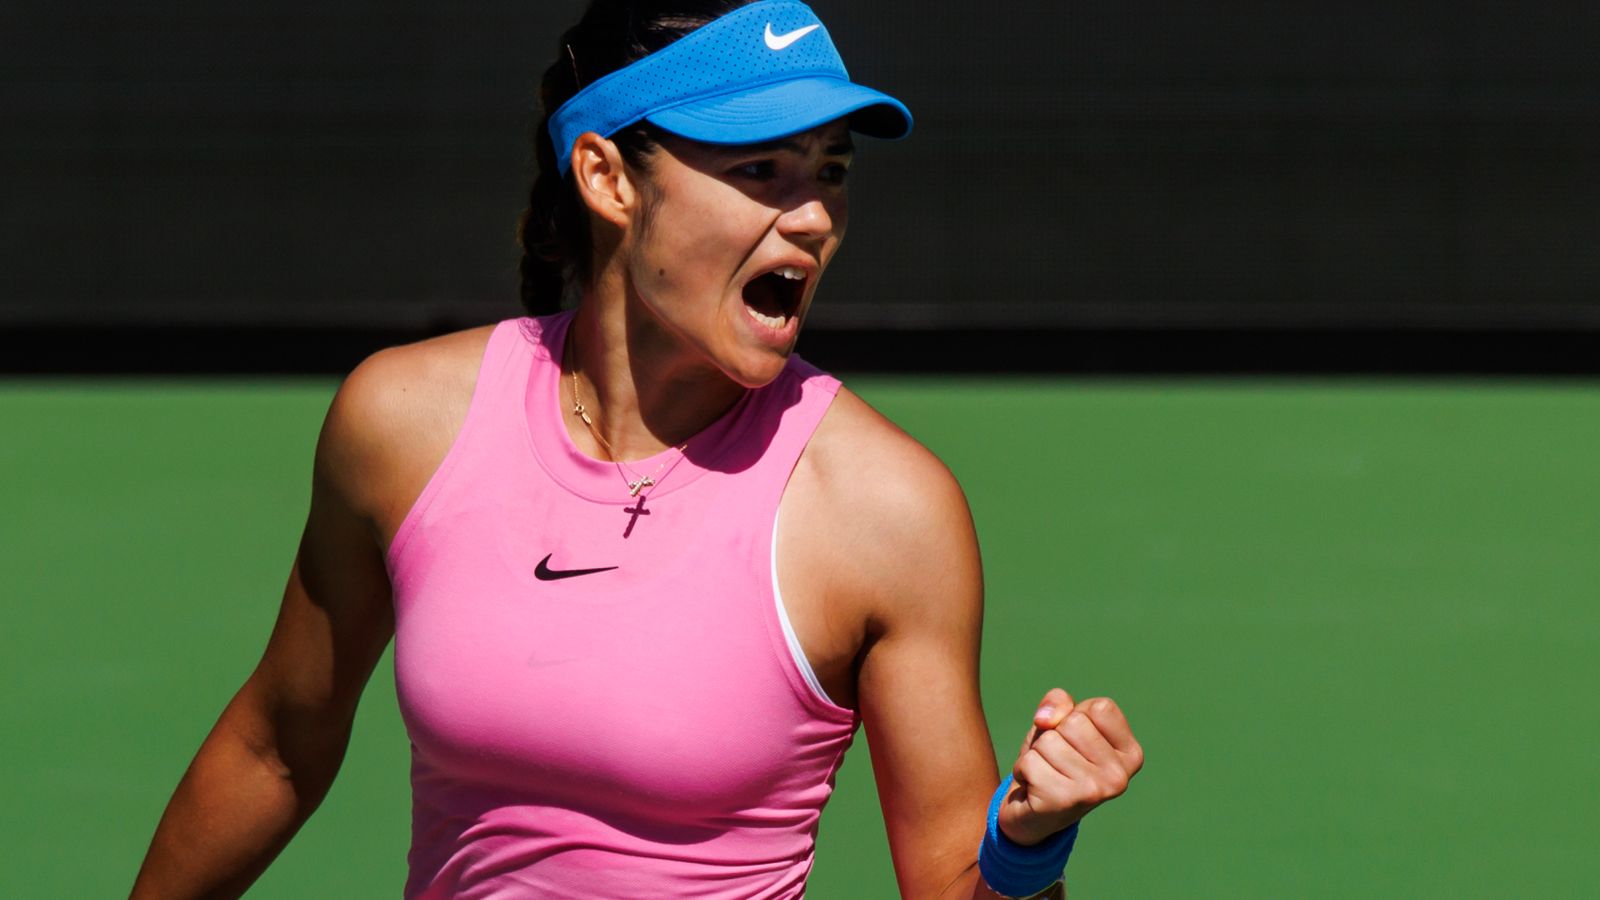 Emma Raducanu Former US Open champion breezes past Rebeka Masarova in